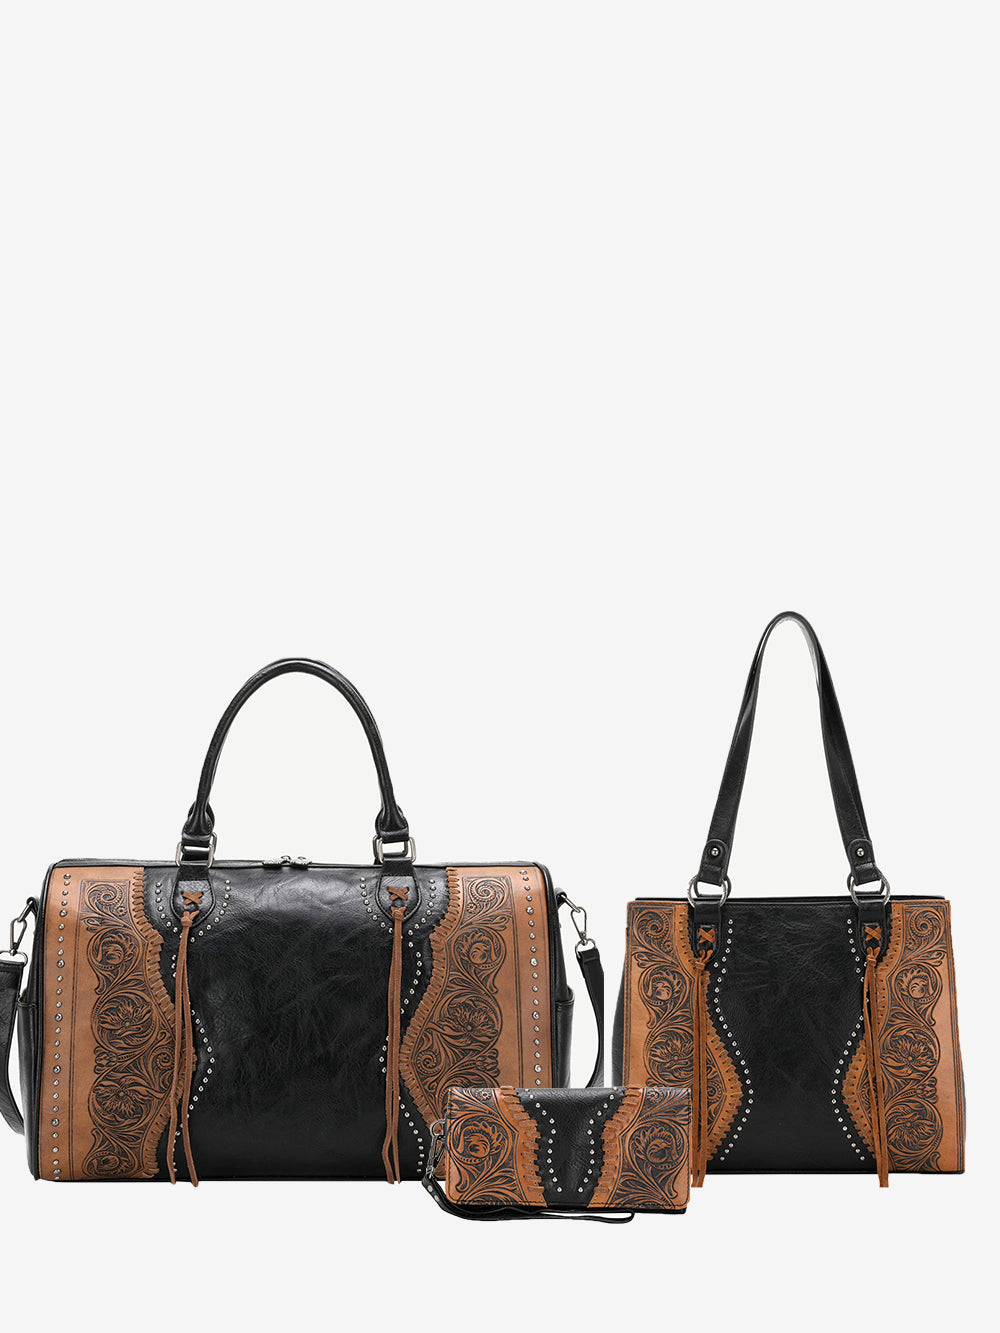 Crocodile embossed purse - leather, studs, fringe, Louis Vuitton